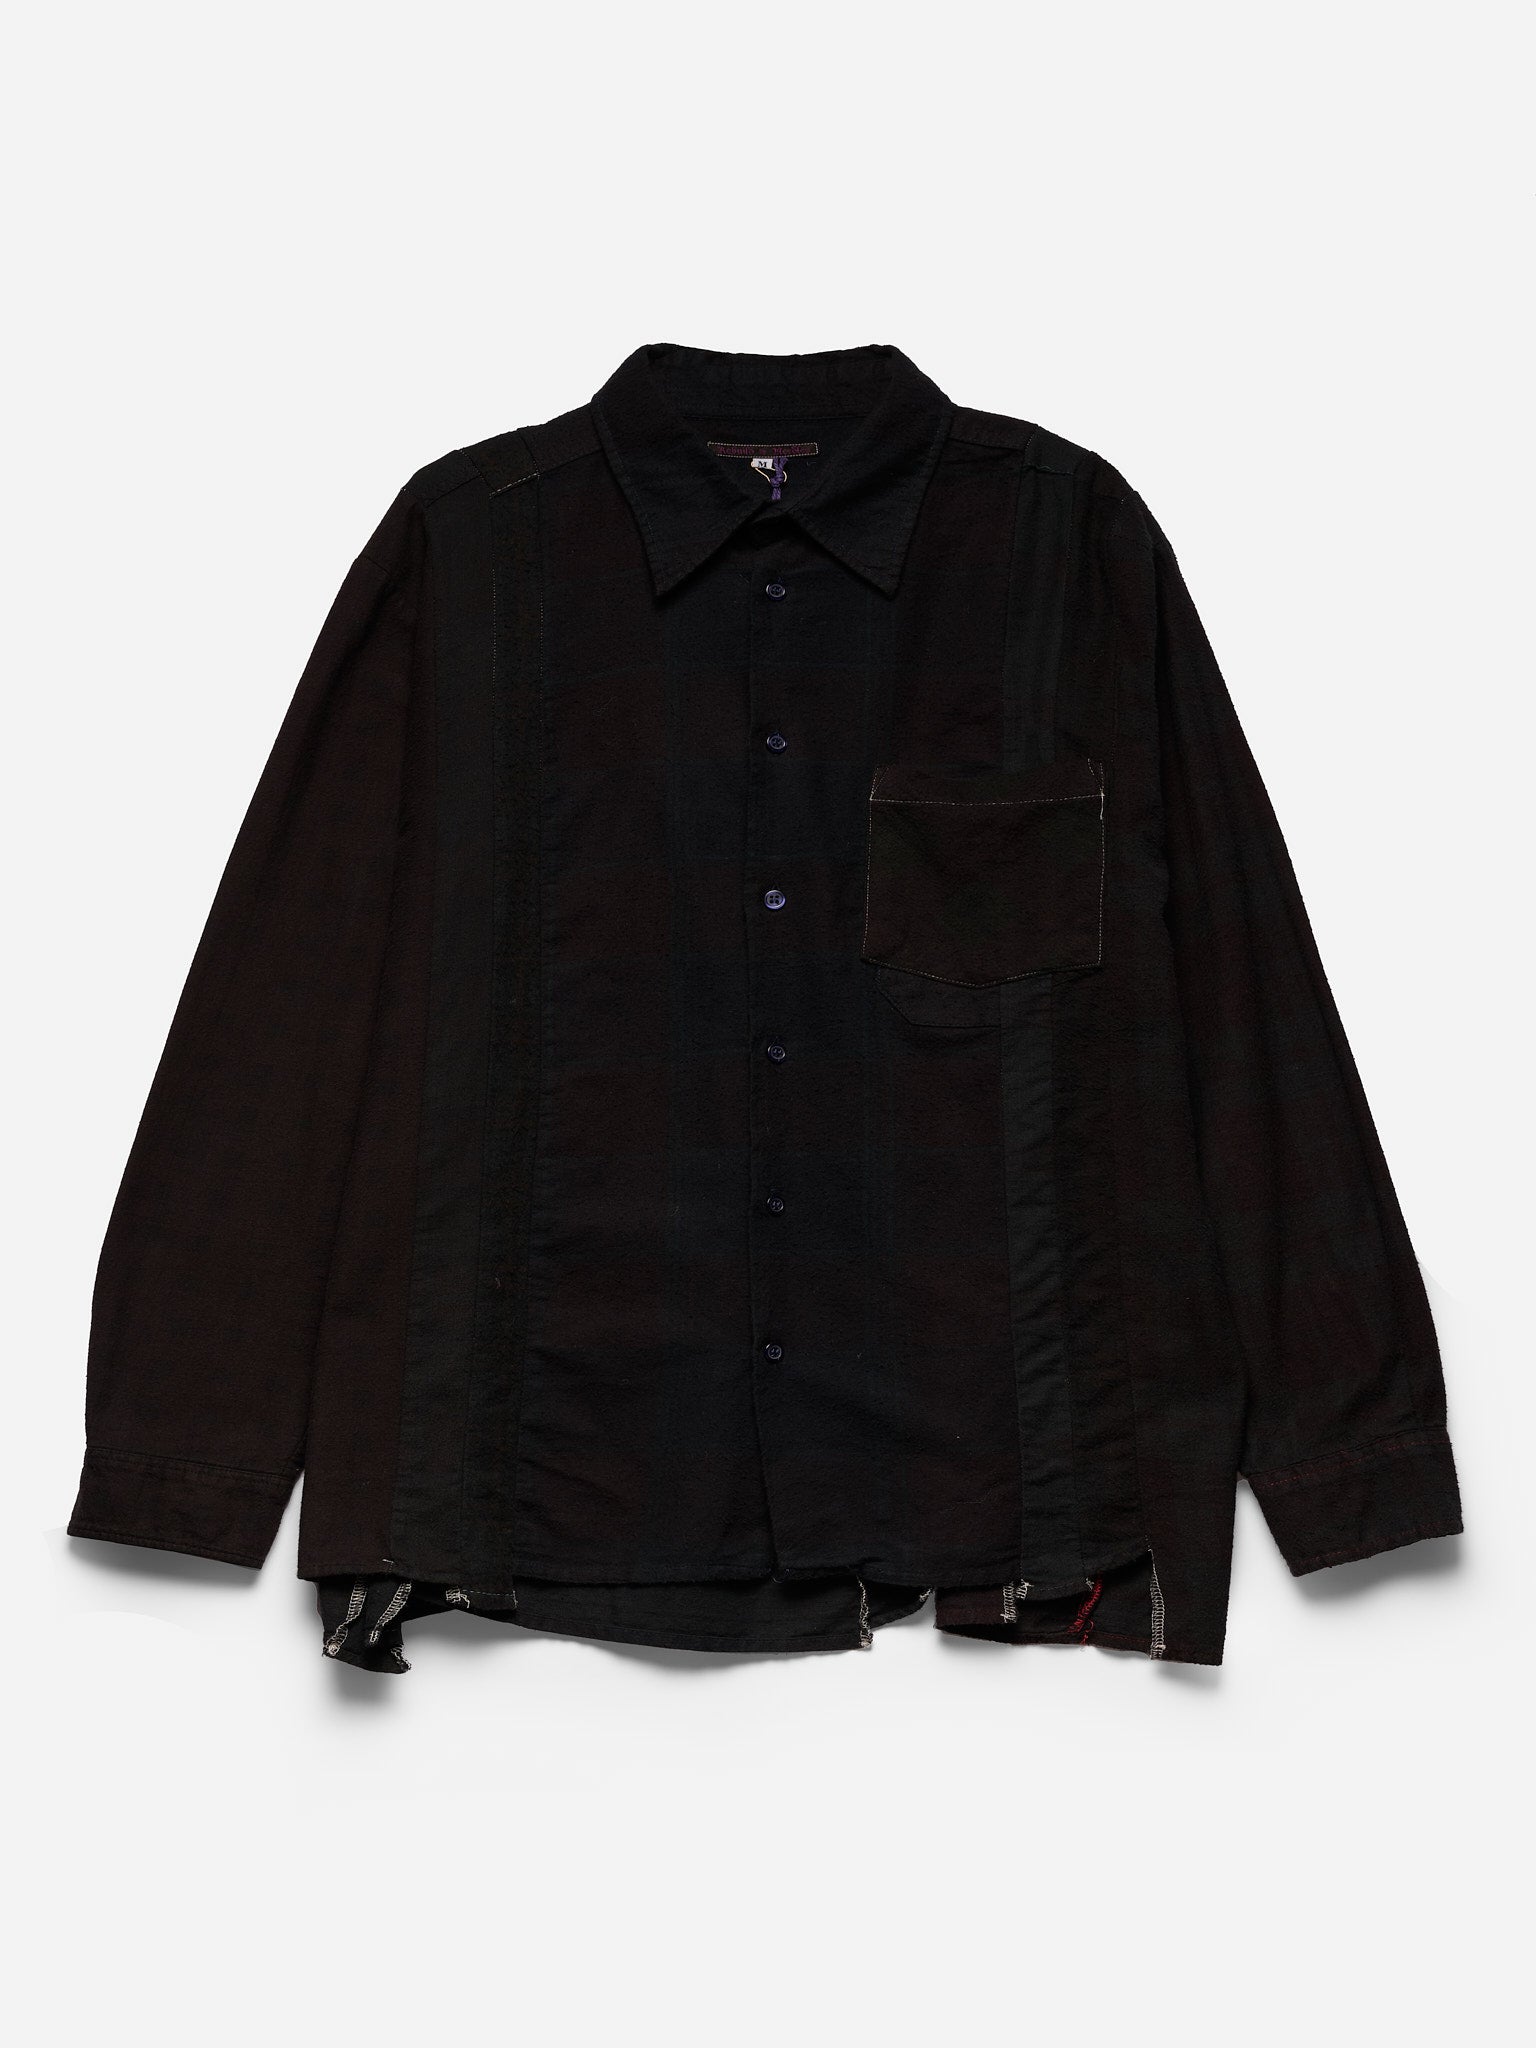 Rebuild by Needles Flannel Shirt - 7 Cuts Shirt / Over Dye Black M